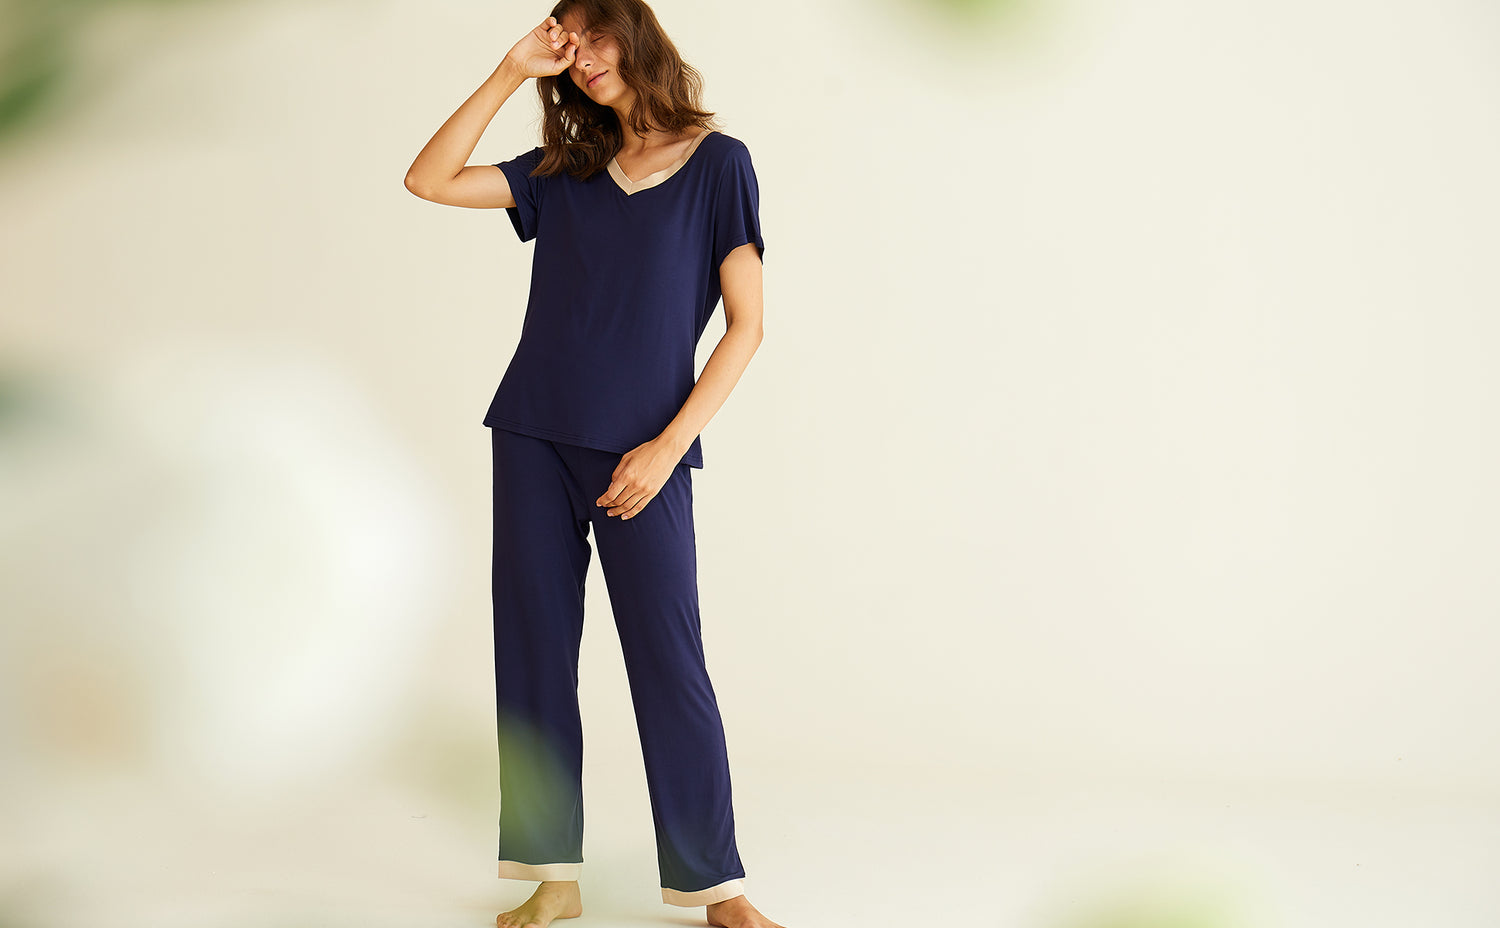 New Women's Pajamas Fashion Luxury Letter Jacquard Lattice